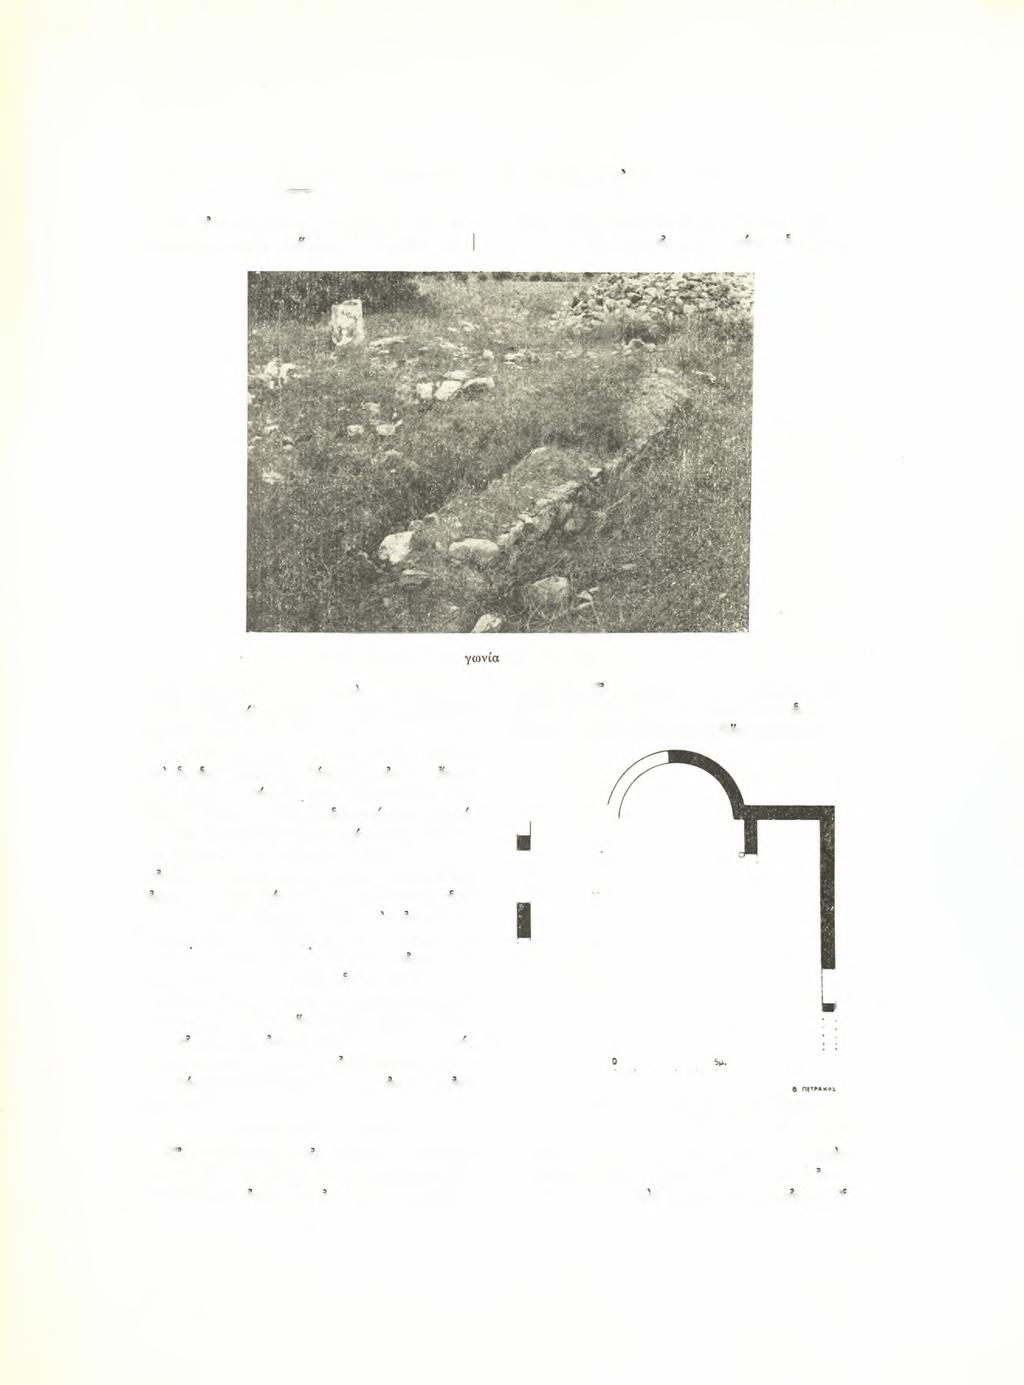 AE 1956 Μεσαιωνικά μνημεία Αττικής, Φωκίδος και Μαγνησίας 31 πρώτου από δυσμών πεσσού τής βορείου κιο- νοστοιχίας. Στήλη I ιω(ρ)γις \ # Άϋανάο(ιος) ήρειπωμένη τρίκλιτος βασιλική (πλάτ. 15.50 μ. εϊκ.